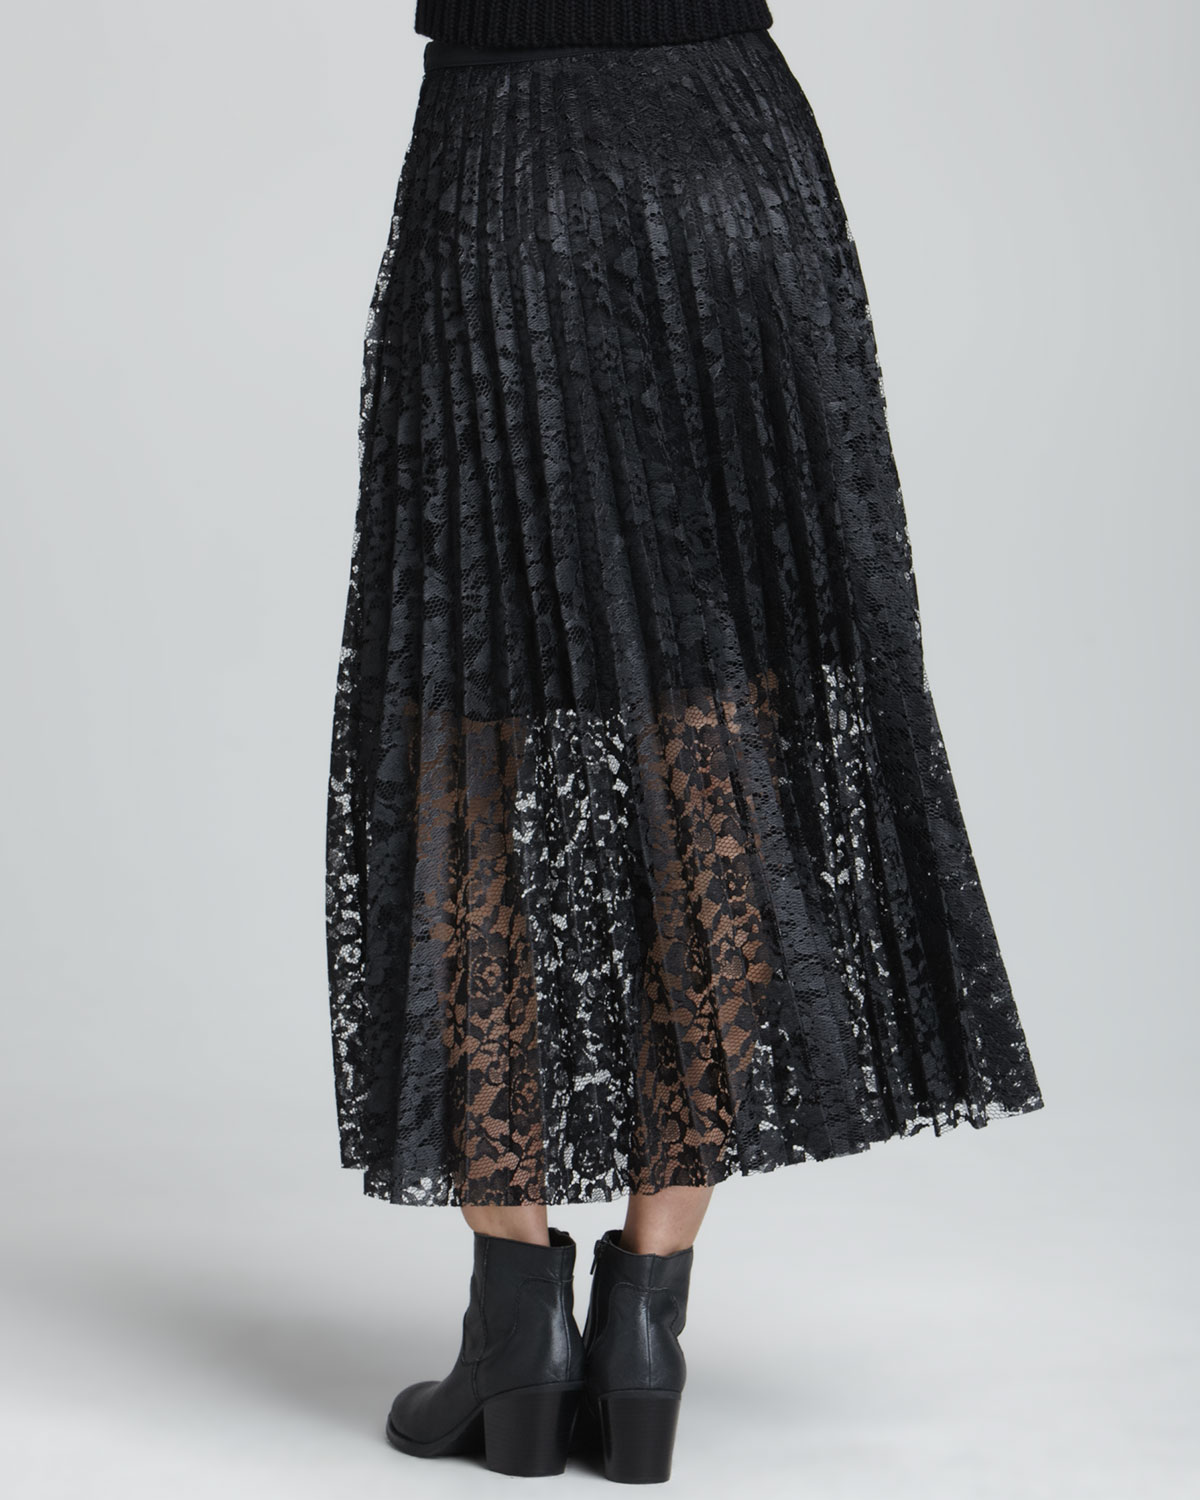 Lyst - Free People Pretty Pleats Lace Maxi Skirt in Black